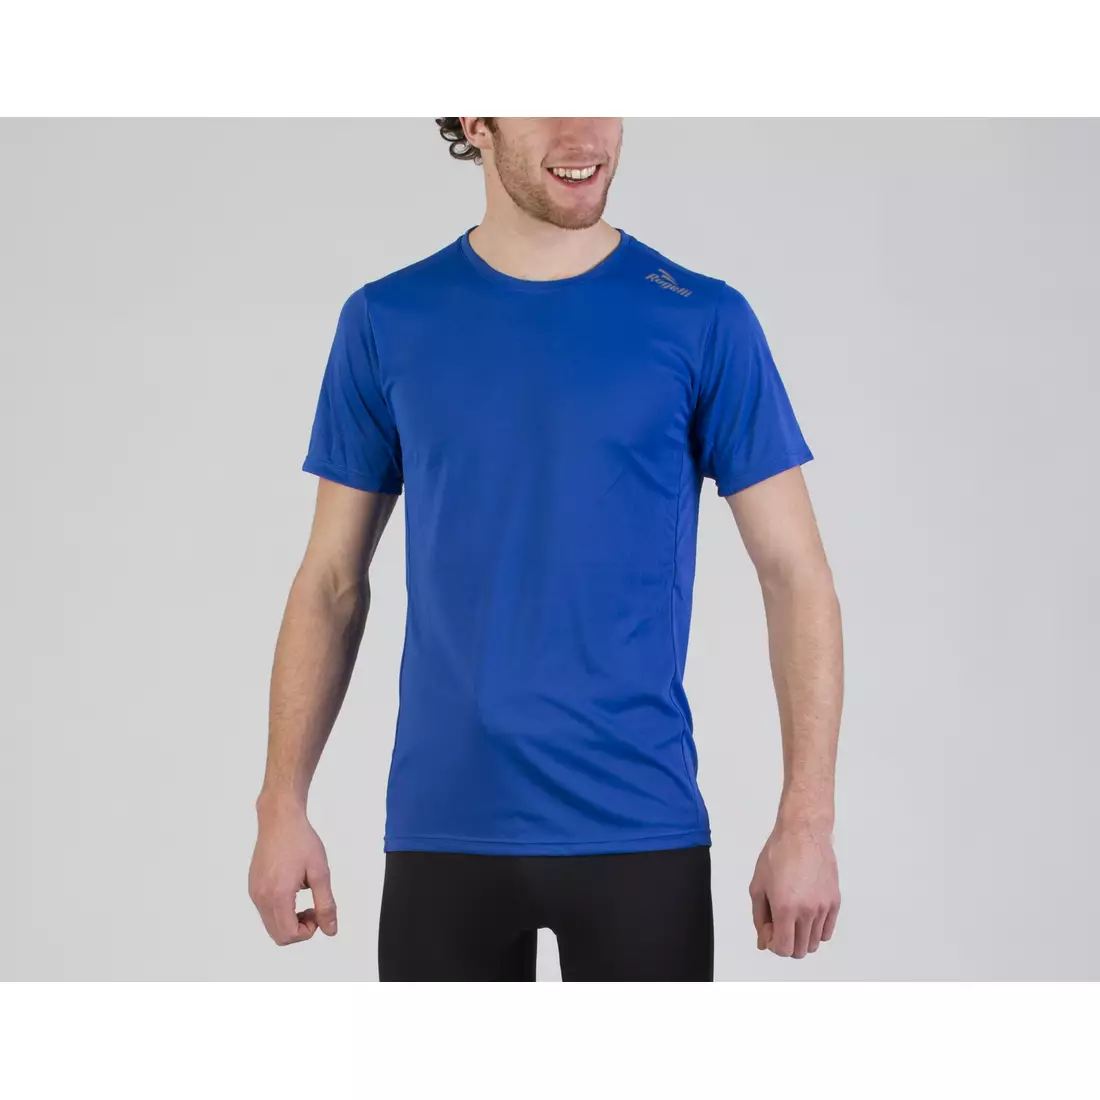 ROGELLI RUN BASIC - men's running T-shirt, 800.252 - blue 